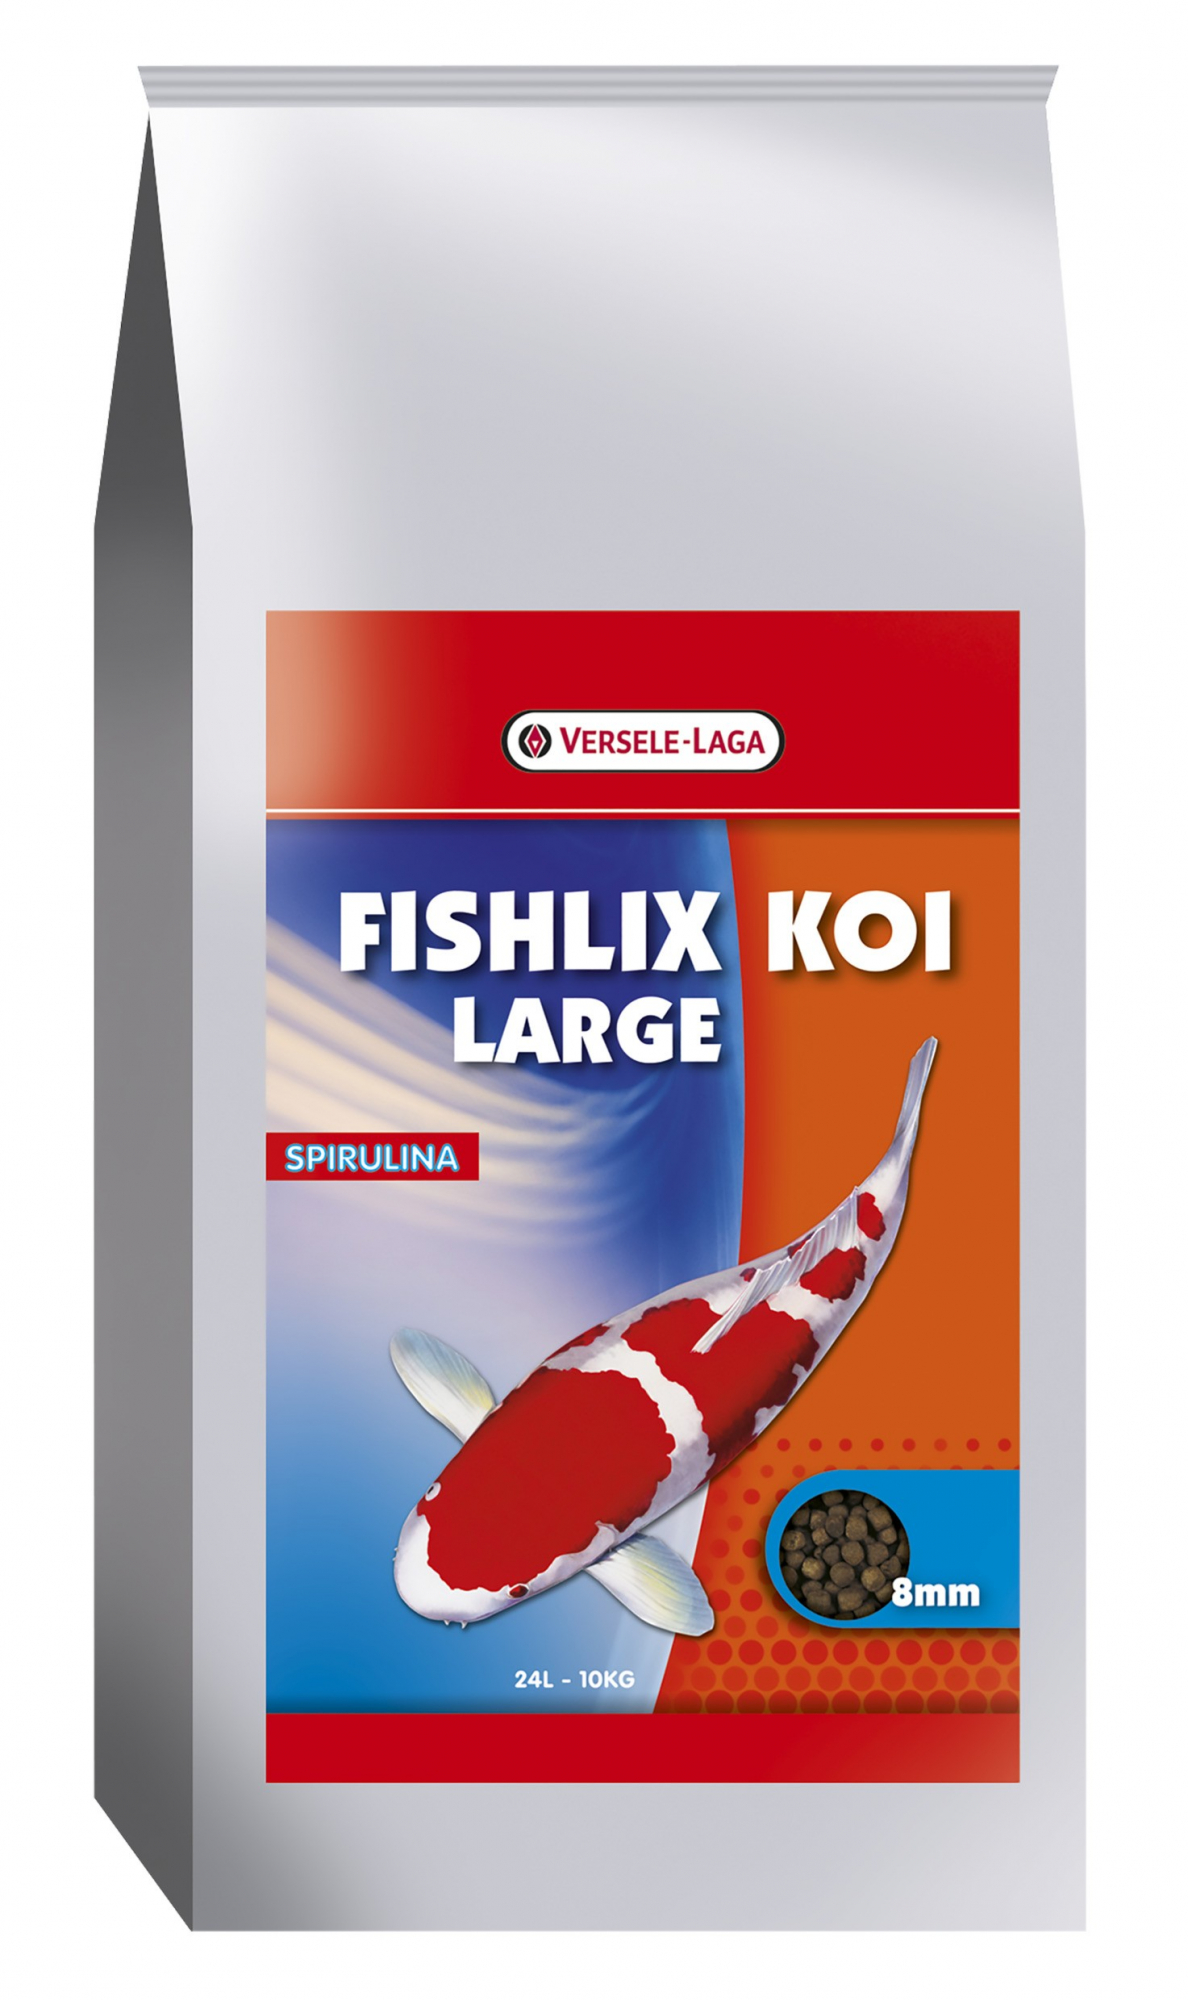 Fishlix Koi Large 8 mm - schwimmendes Granulat für Kois